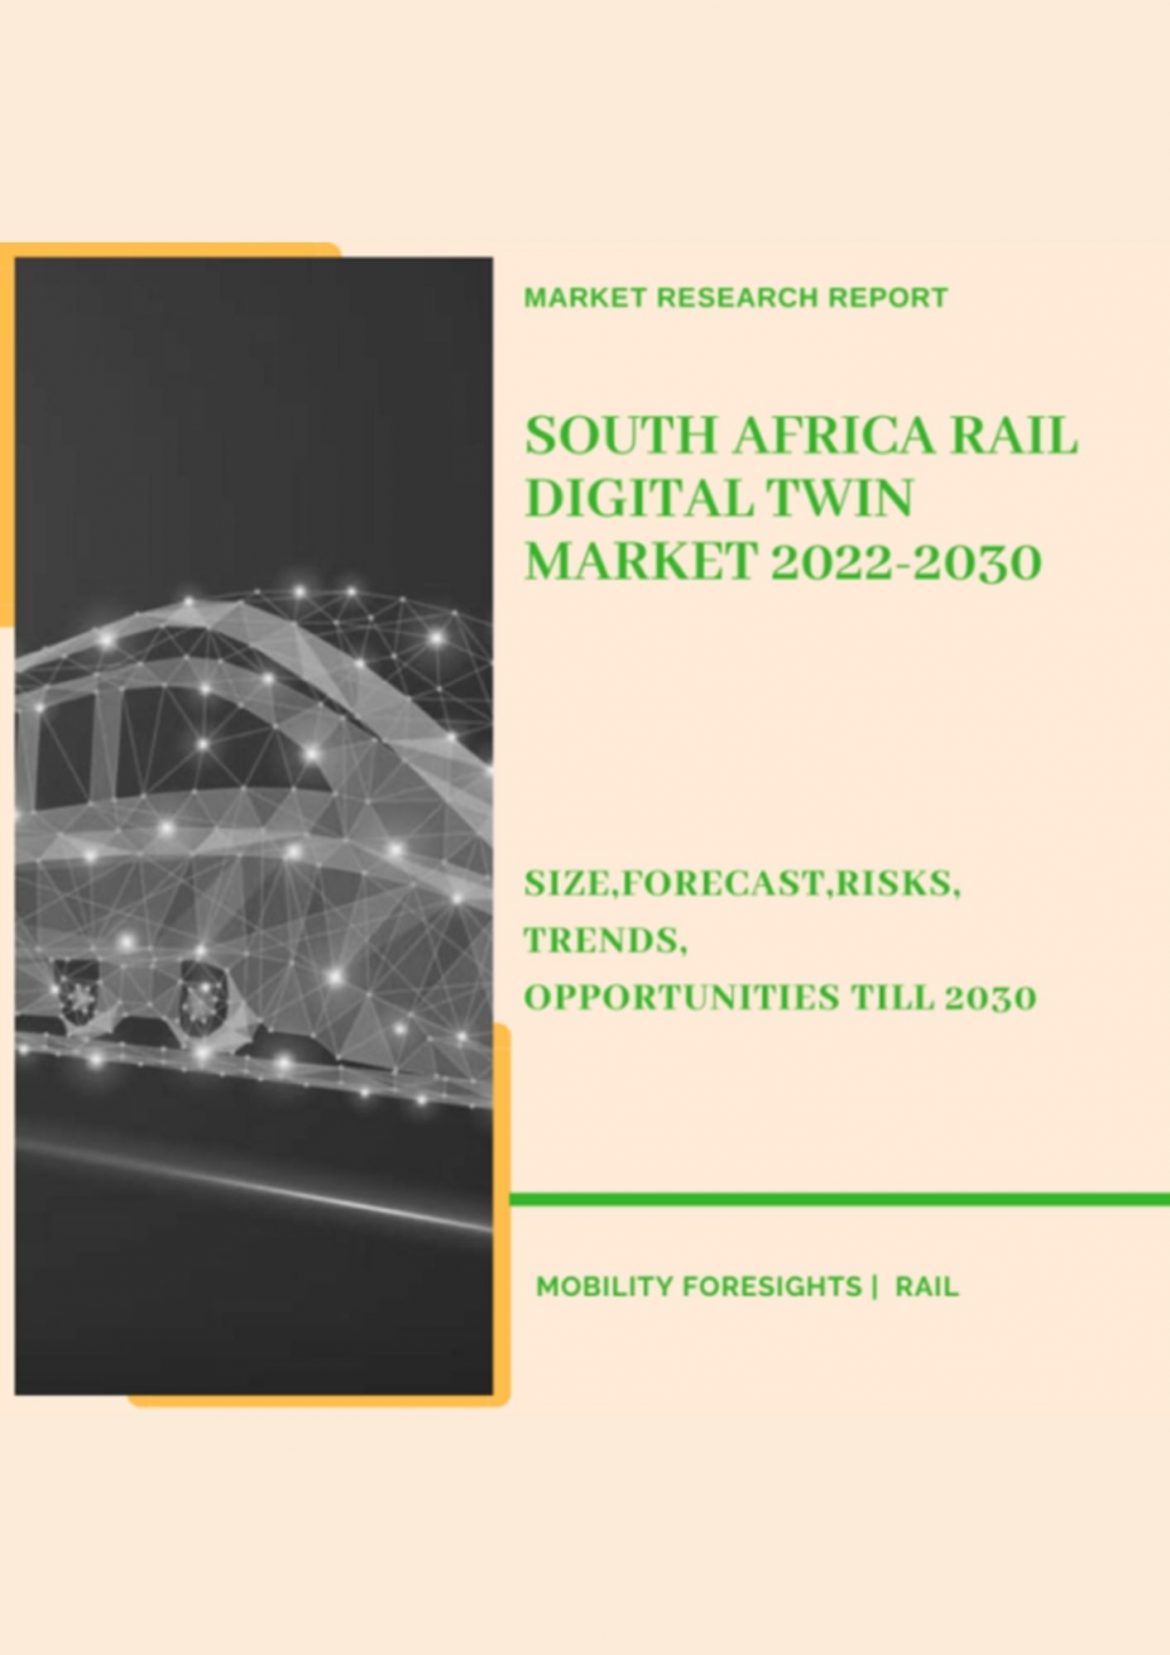 South Africa Rail Digital Twin Market 2022-2030